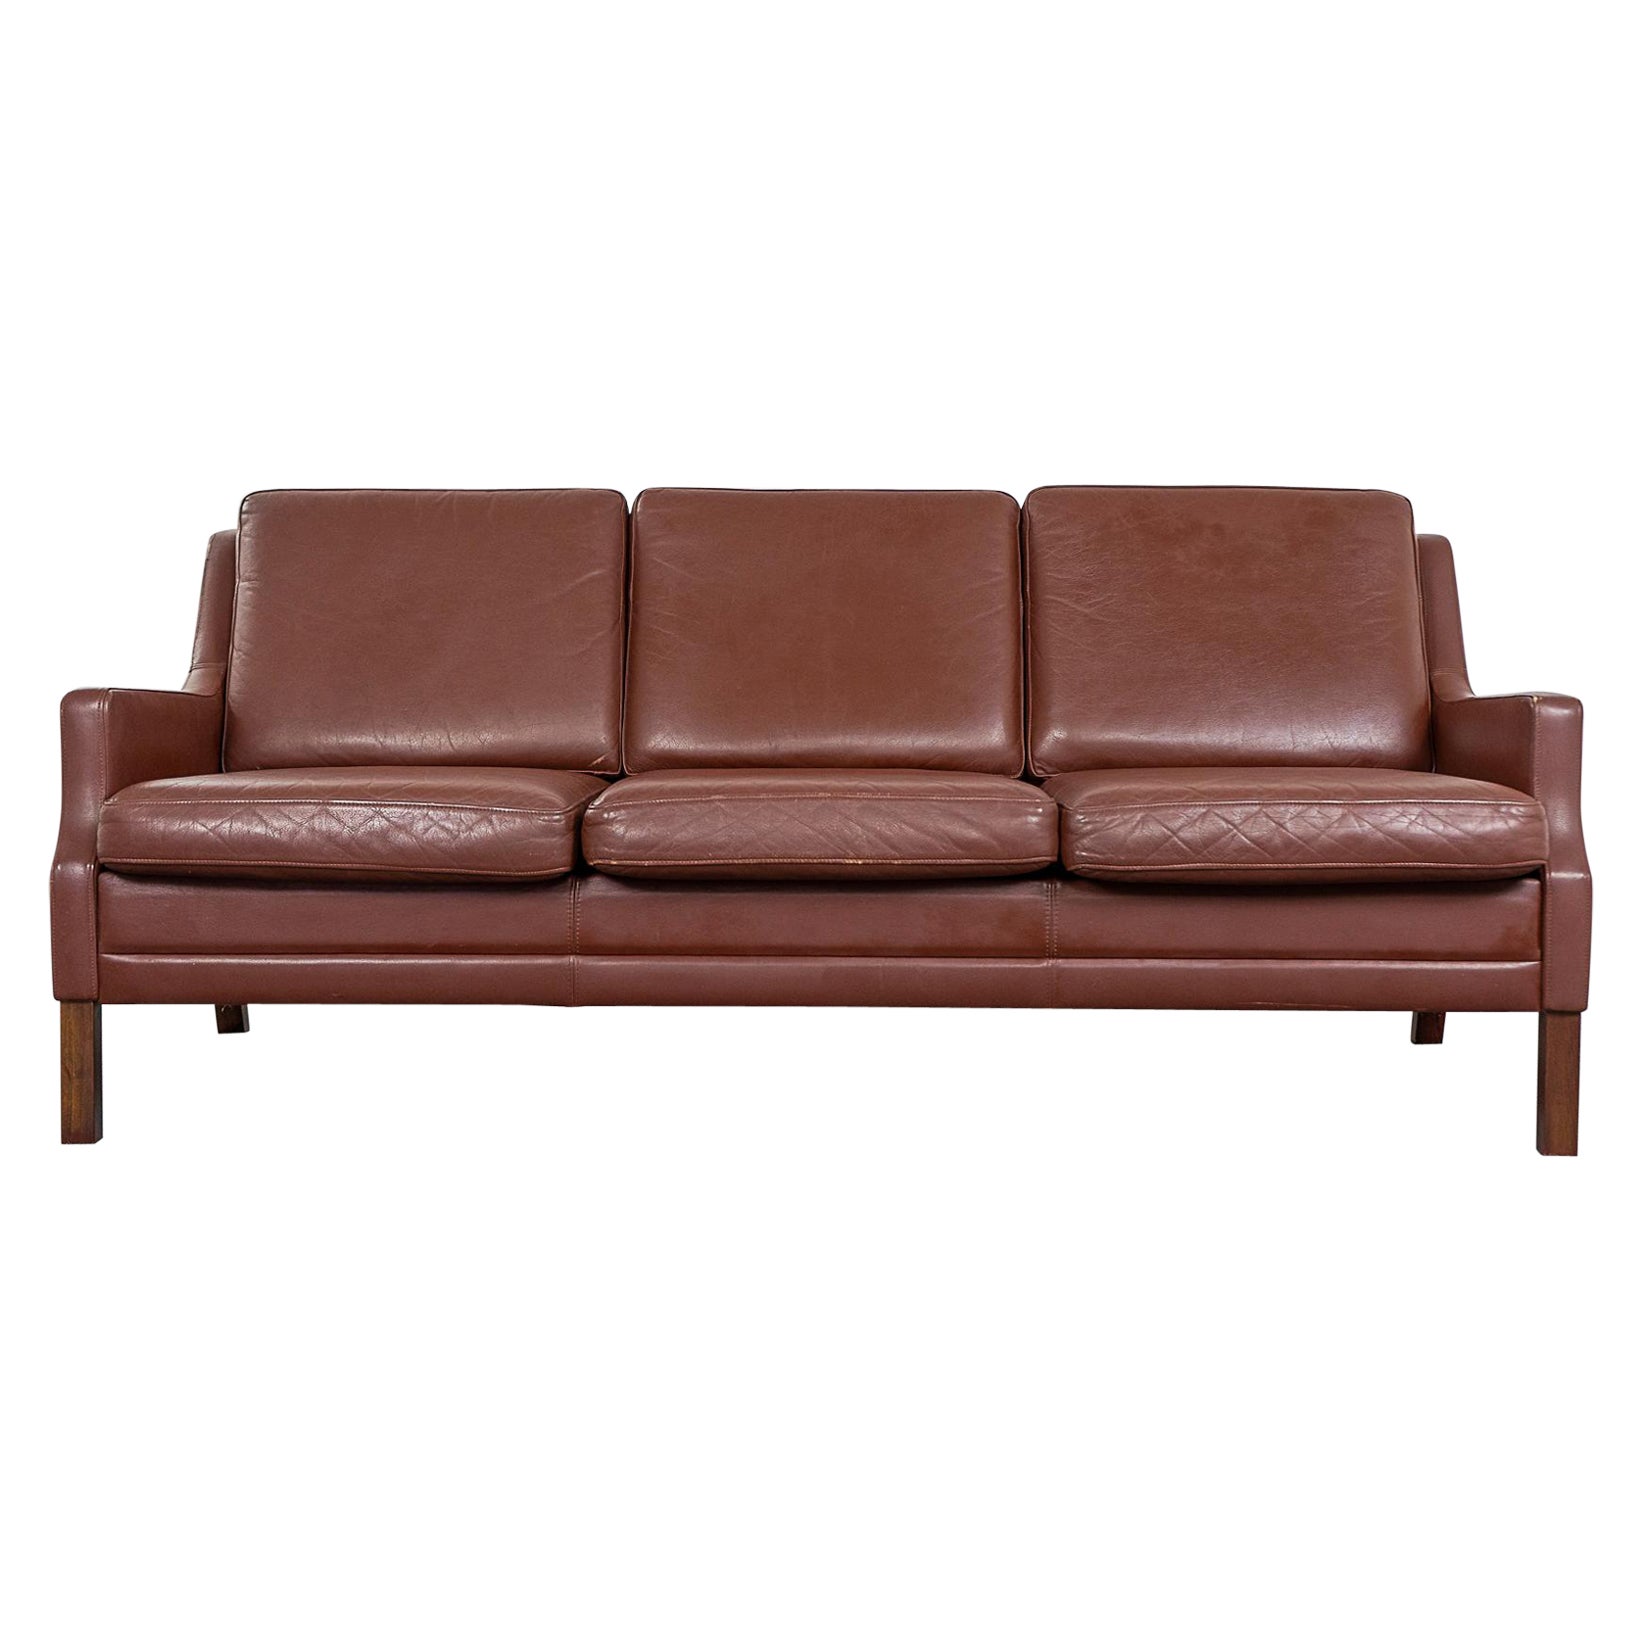 Danish Mid-Century Modern Brown Leather Sofa  For Sale